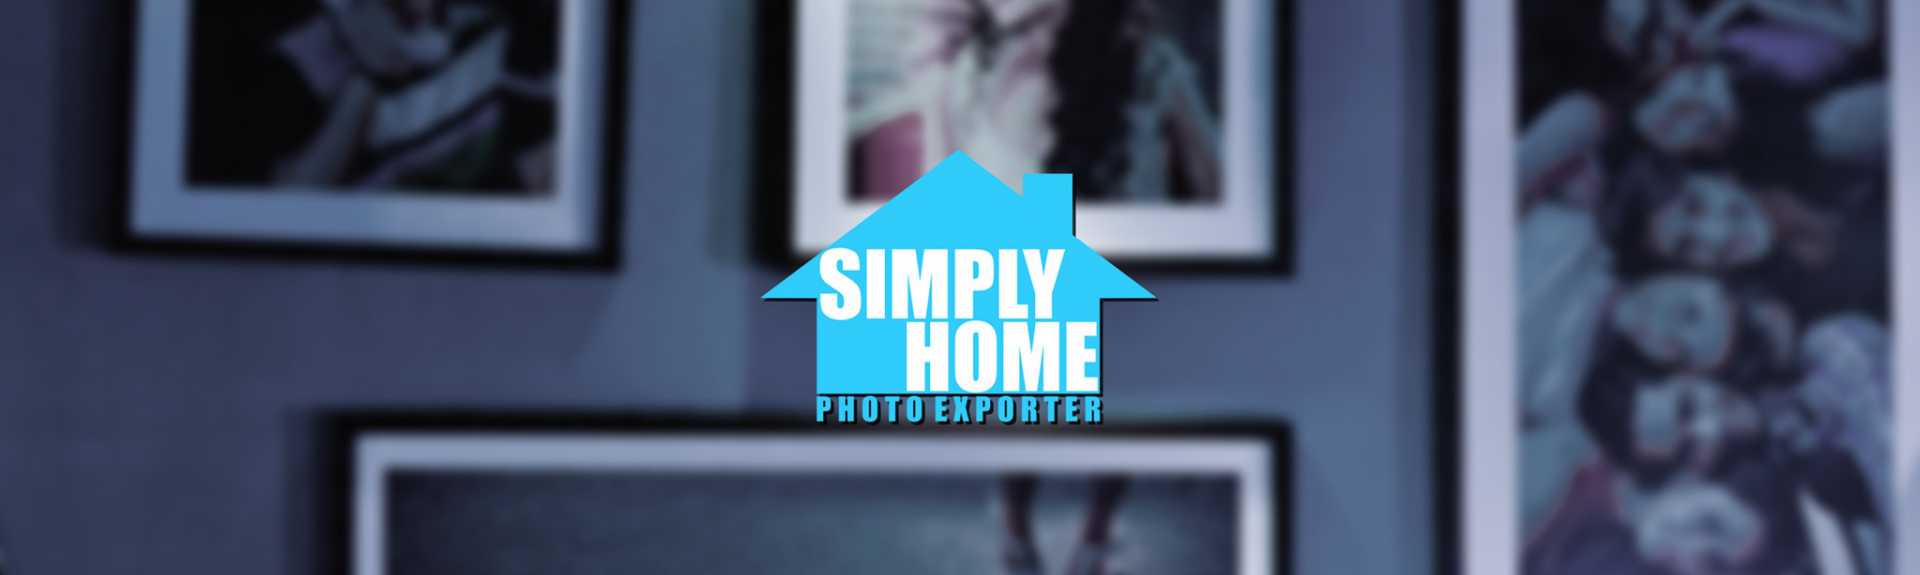 Simply Home Photo Exporter